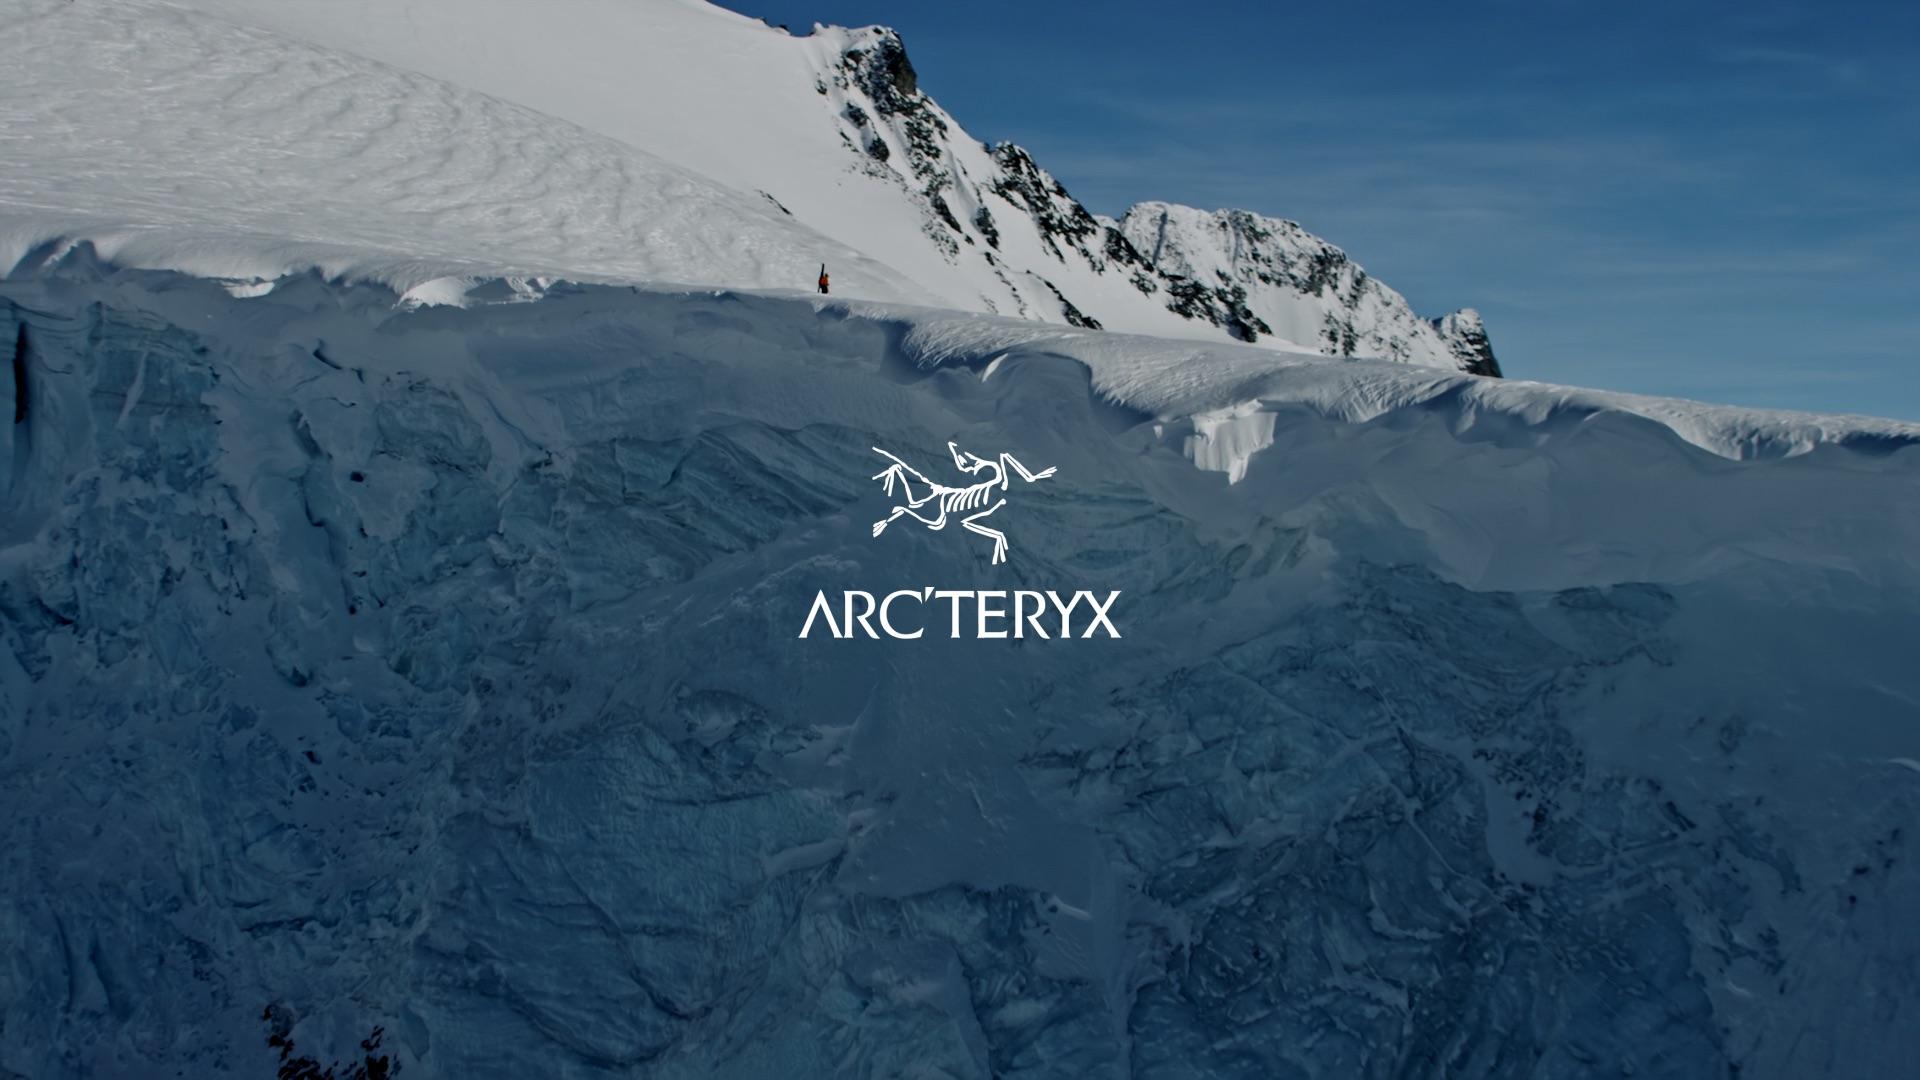 Arc'teryx Wallpapers - Top Free Arc'teryx Backgrounds - WallpaperAccess